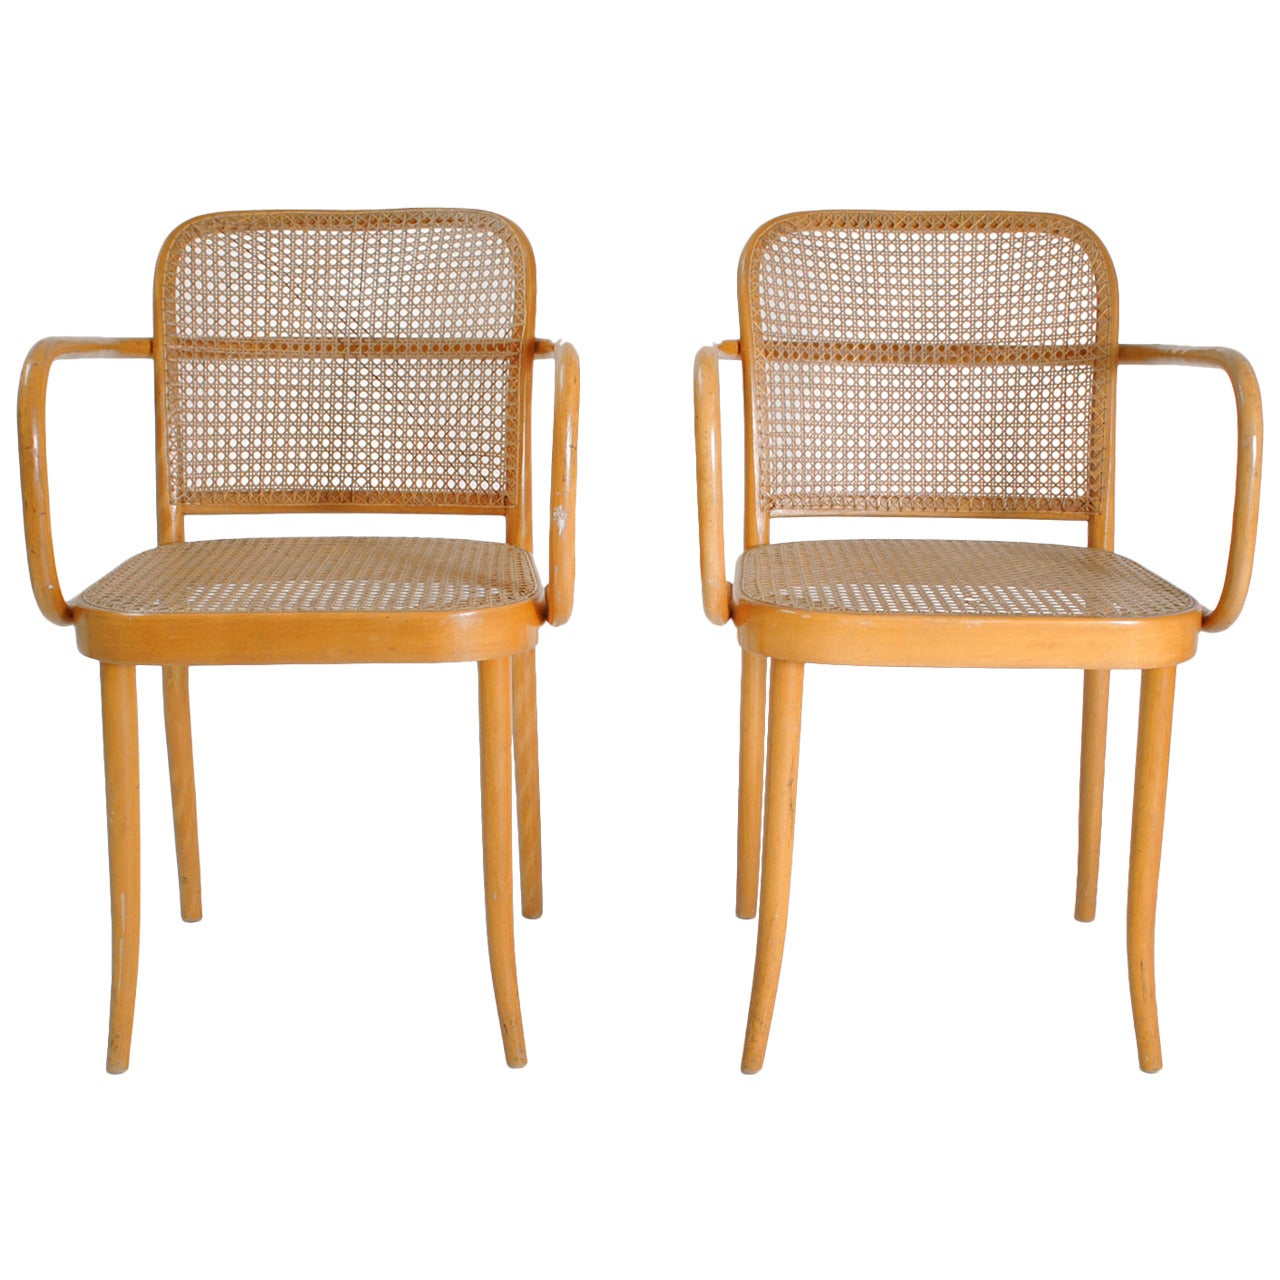 Pair of Chairs Model Prague Designed by Josef Hoffman